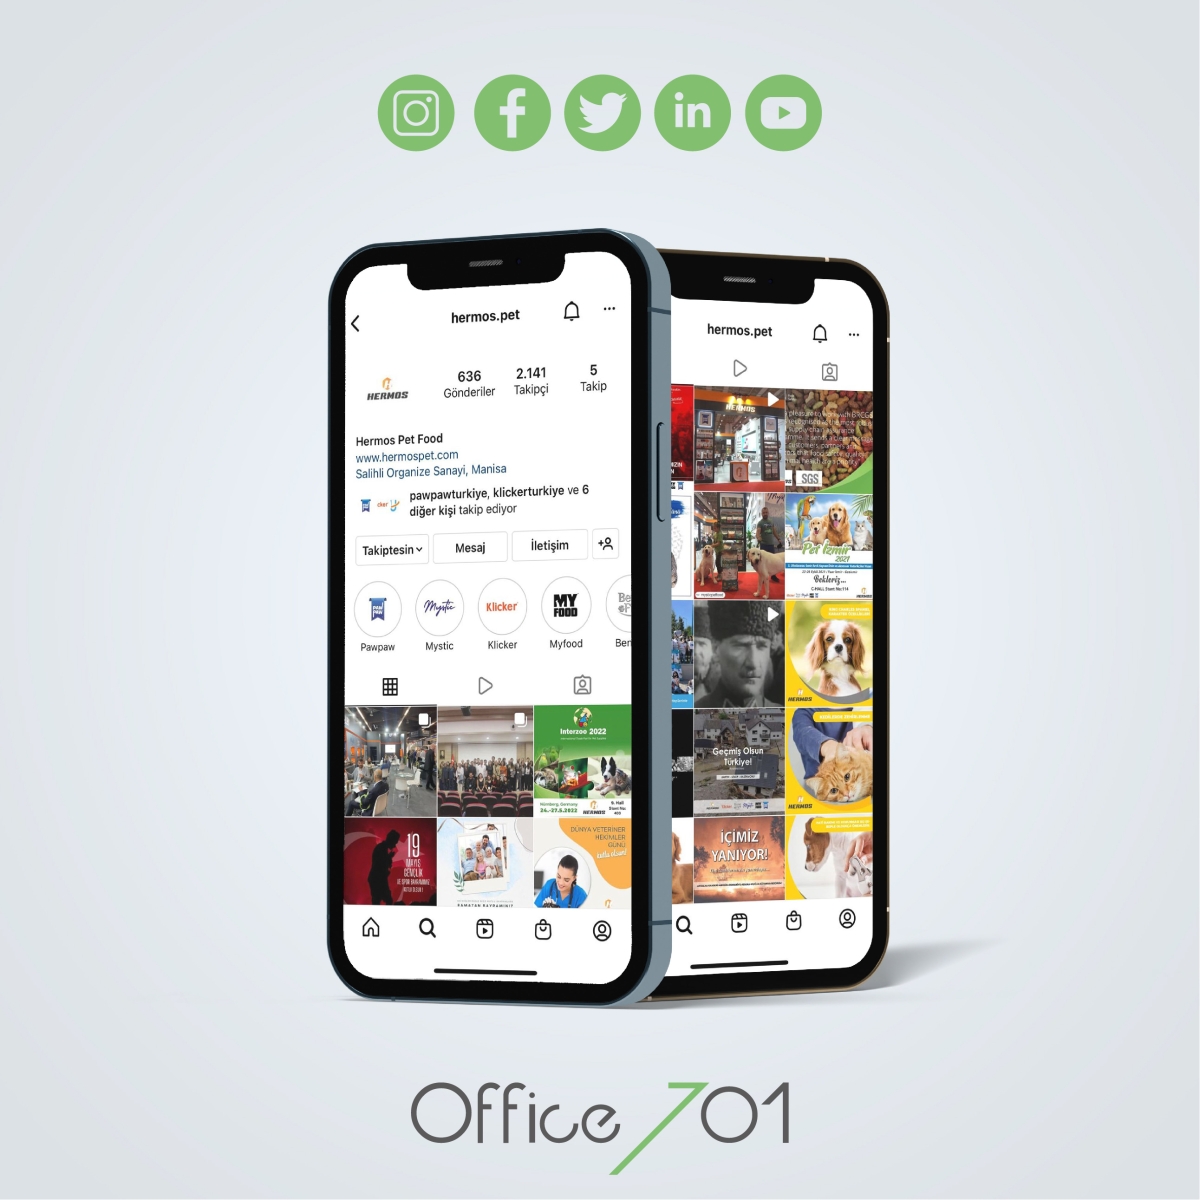 Office701 | Hermospet | Social Media Management